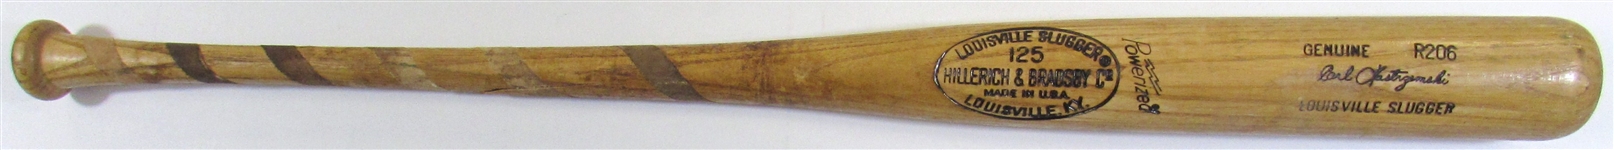 1977-79 Carl Yastrzemski Game Used Bat